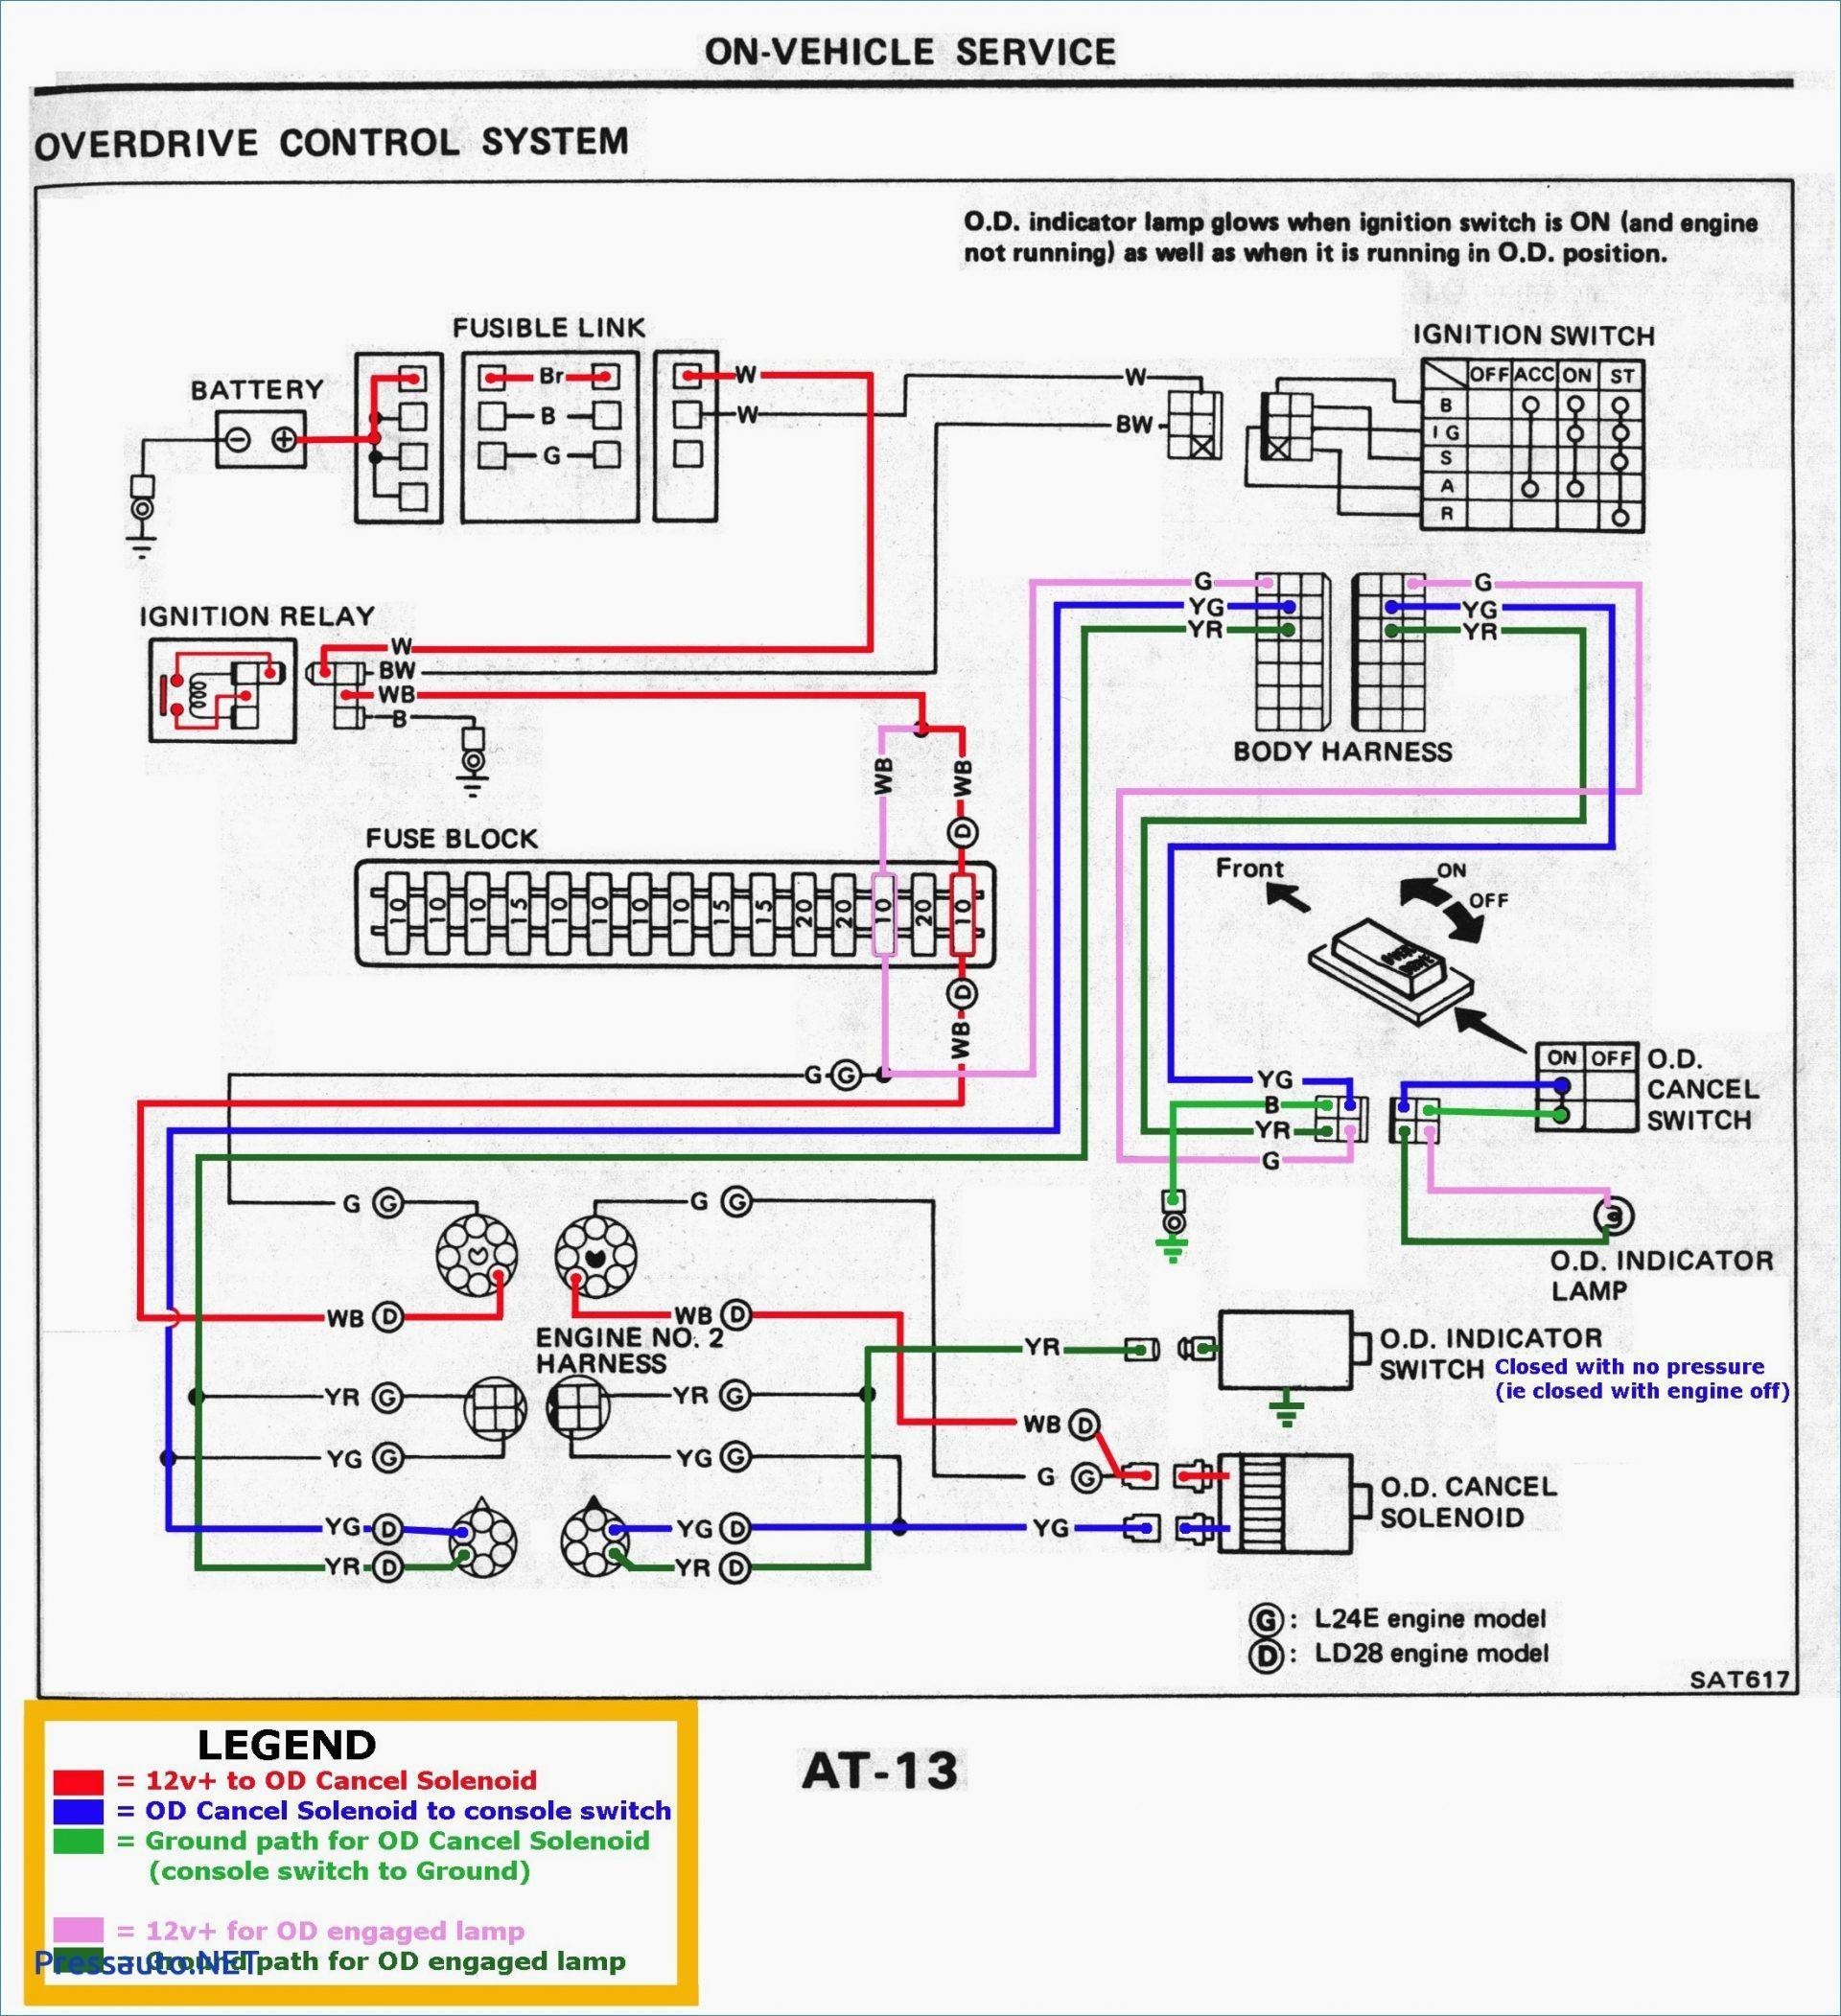 2014 Chevy Cruze Engine Diagram 2014 Silverado Well Diagram Schematics Wiring Diagrams • Of 2014 Chevy Cruze Engine Diagram